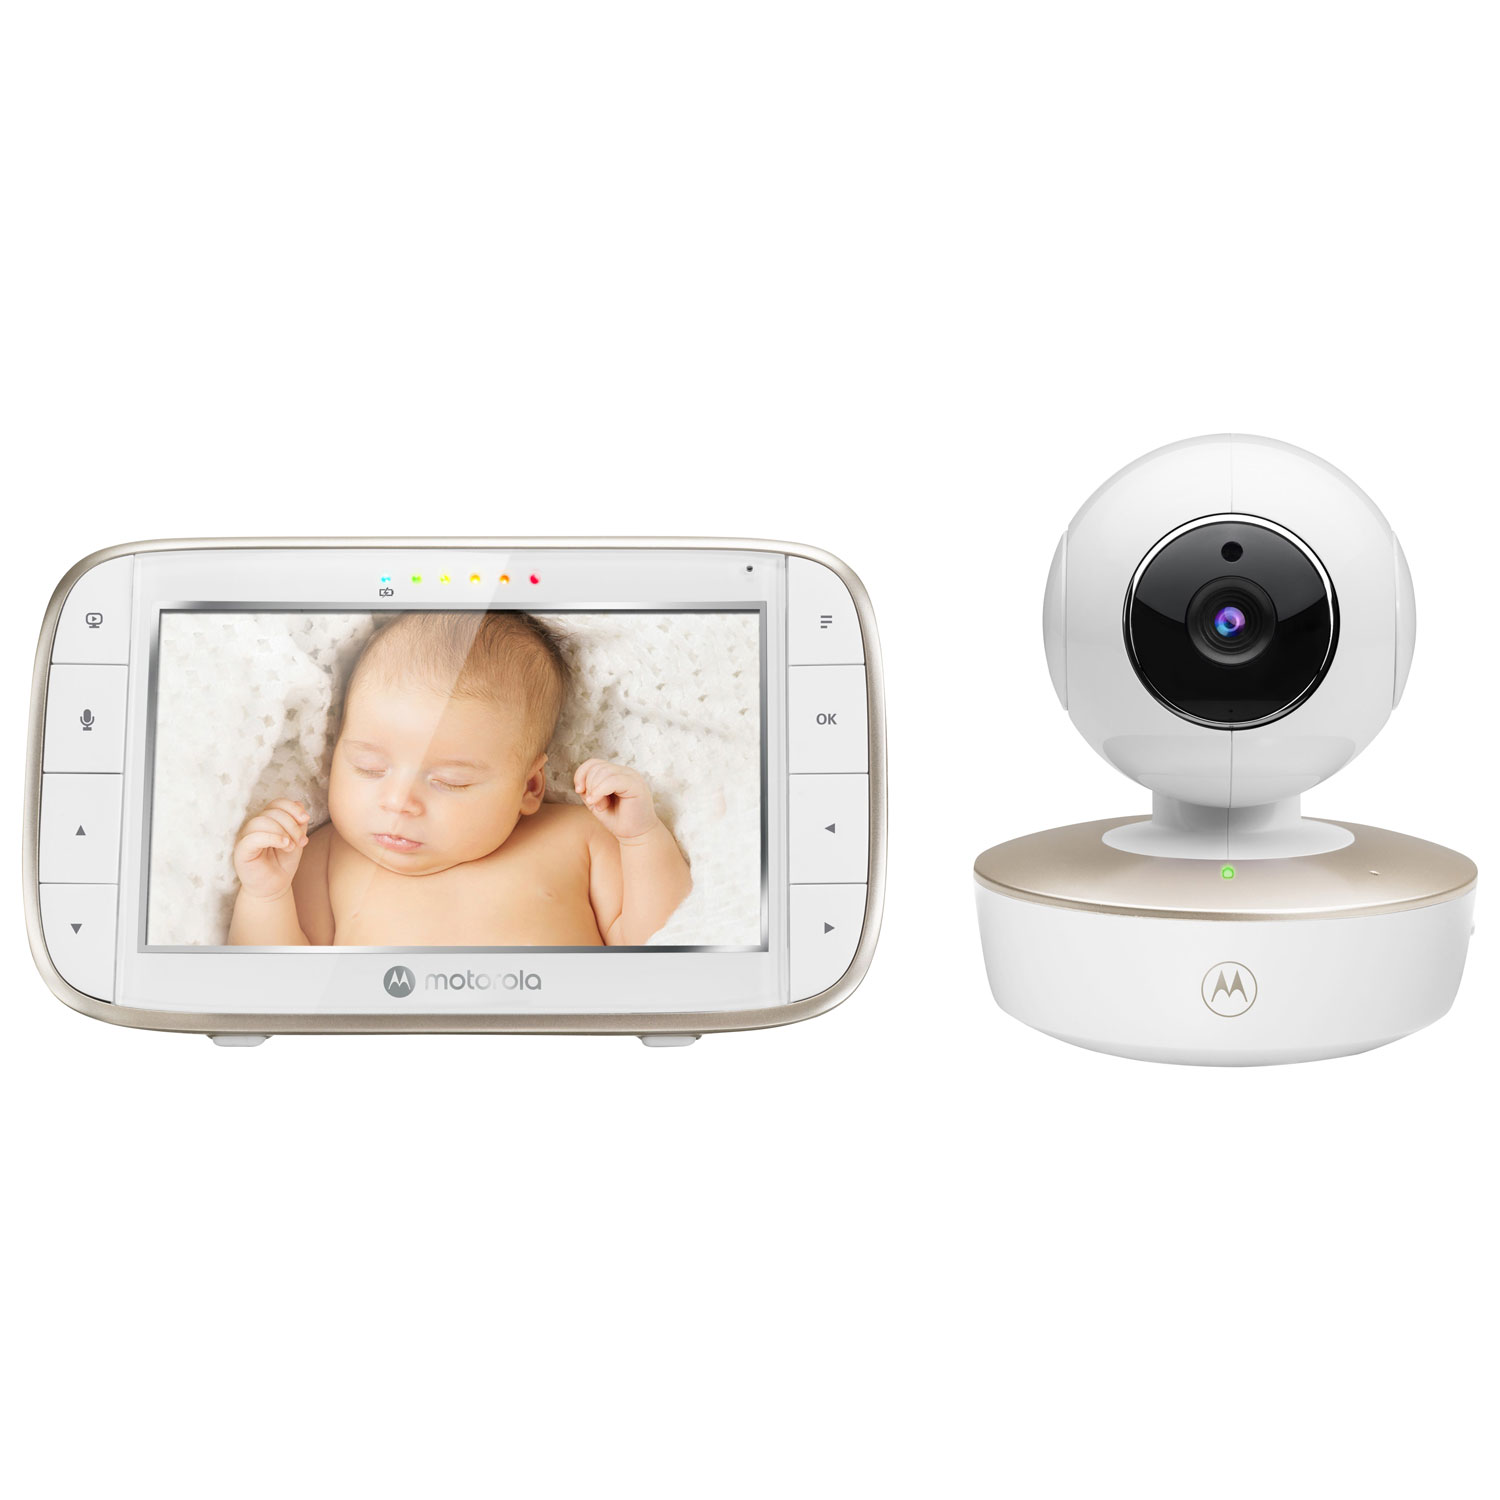 Motorola 5" Wi-Fi Video Smart Baby Monitor with Crib Mount (VM855) - White/Gold